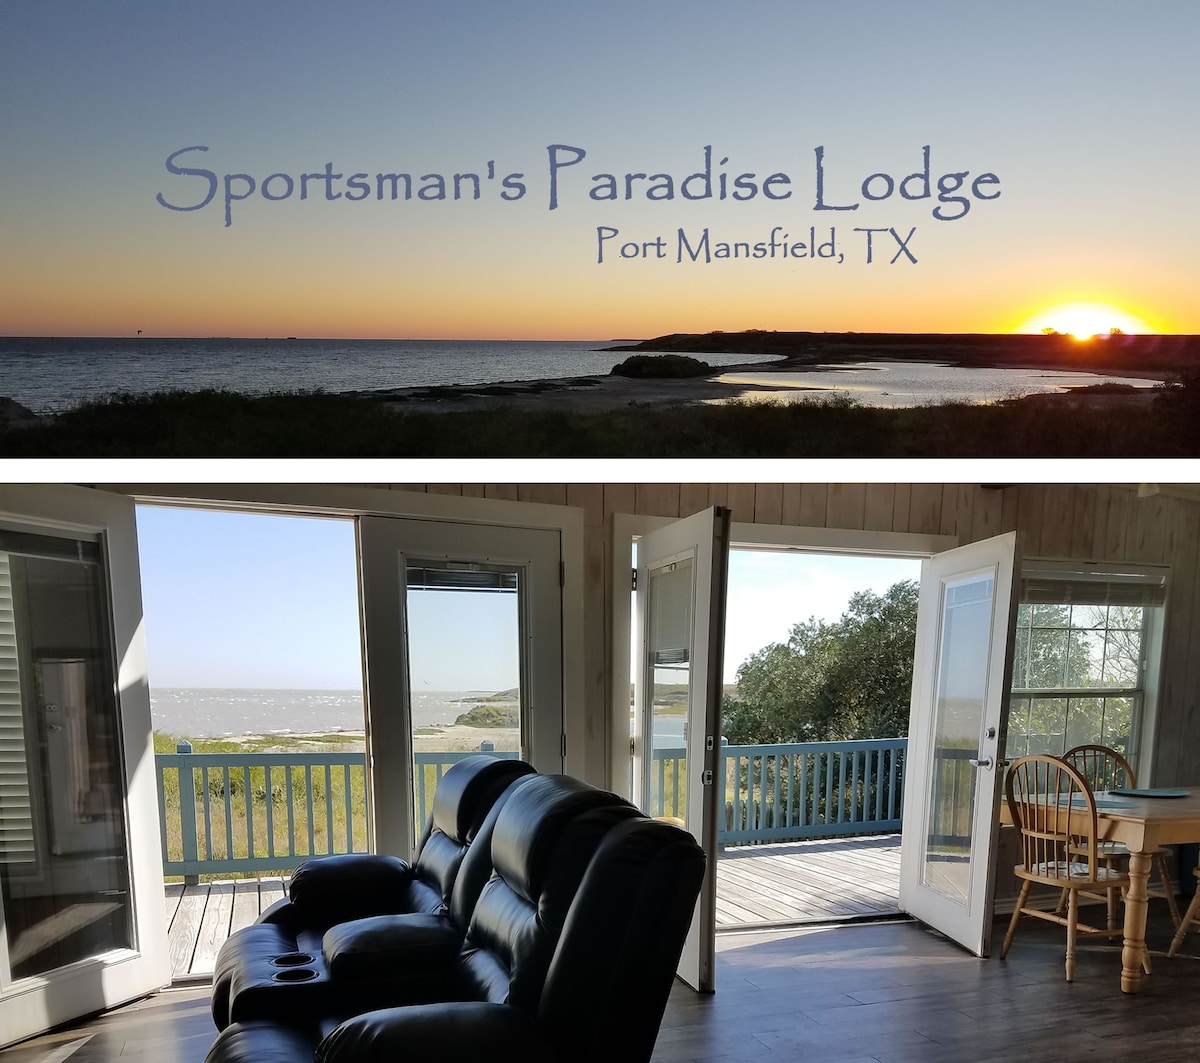 Sportsman 's Paradise Lodge Port Mansfield